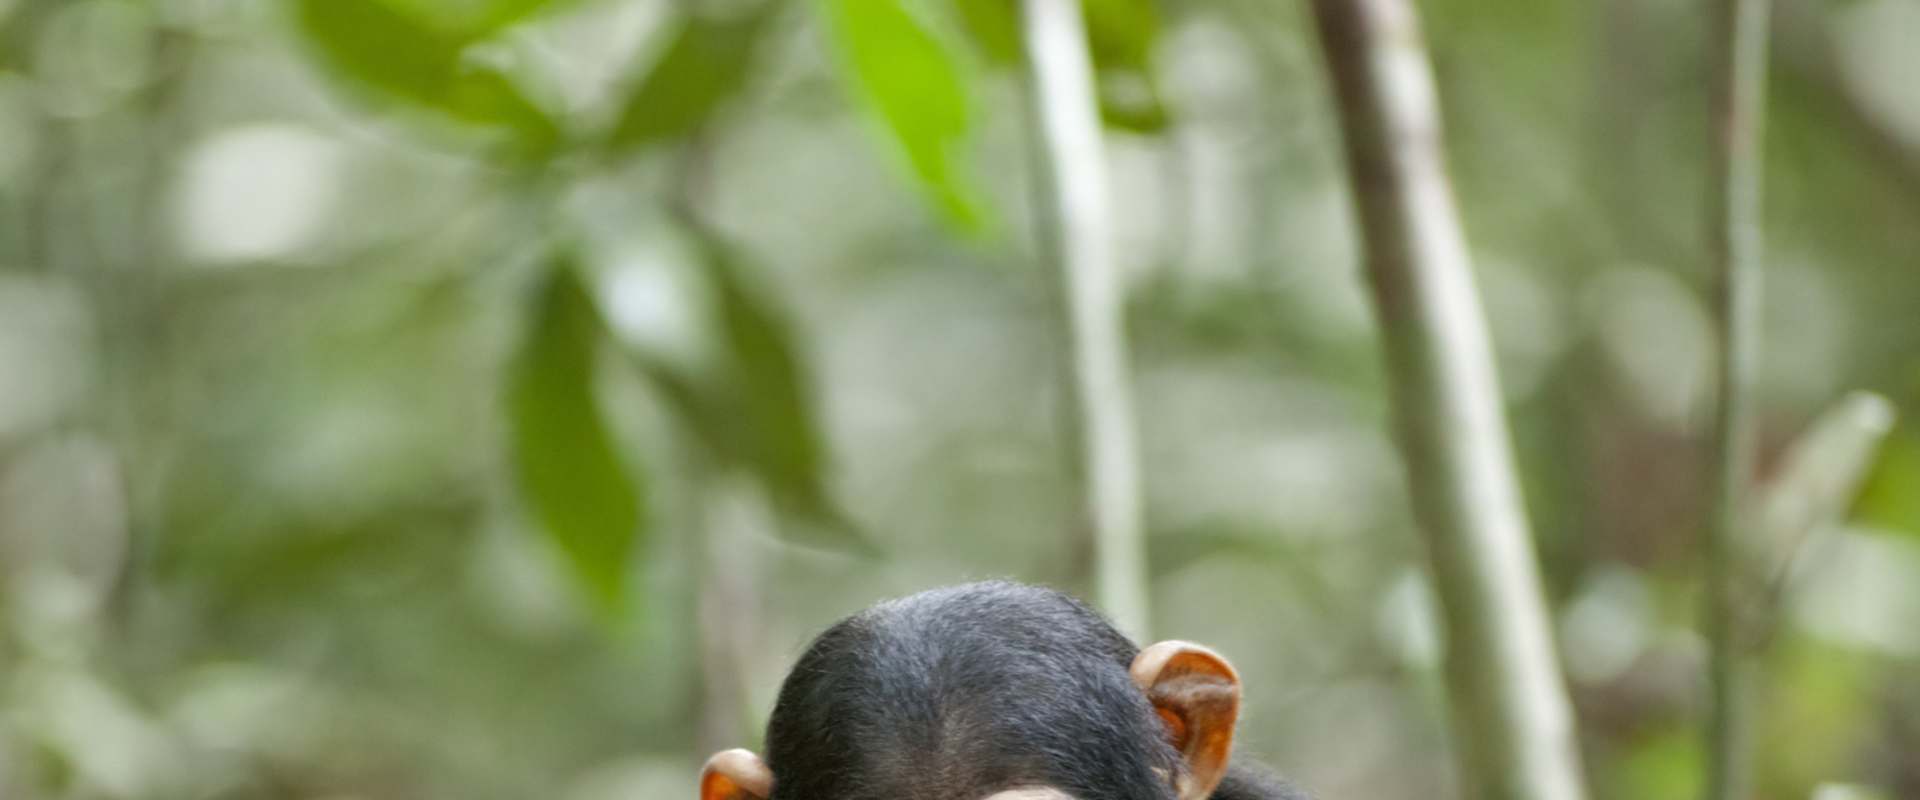 Chimpanzee background 1